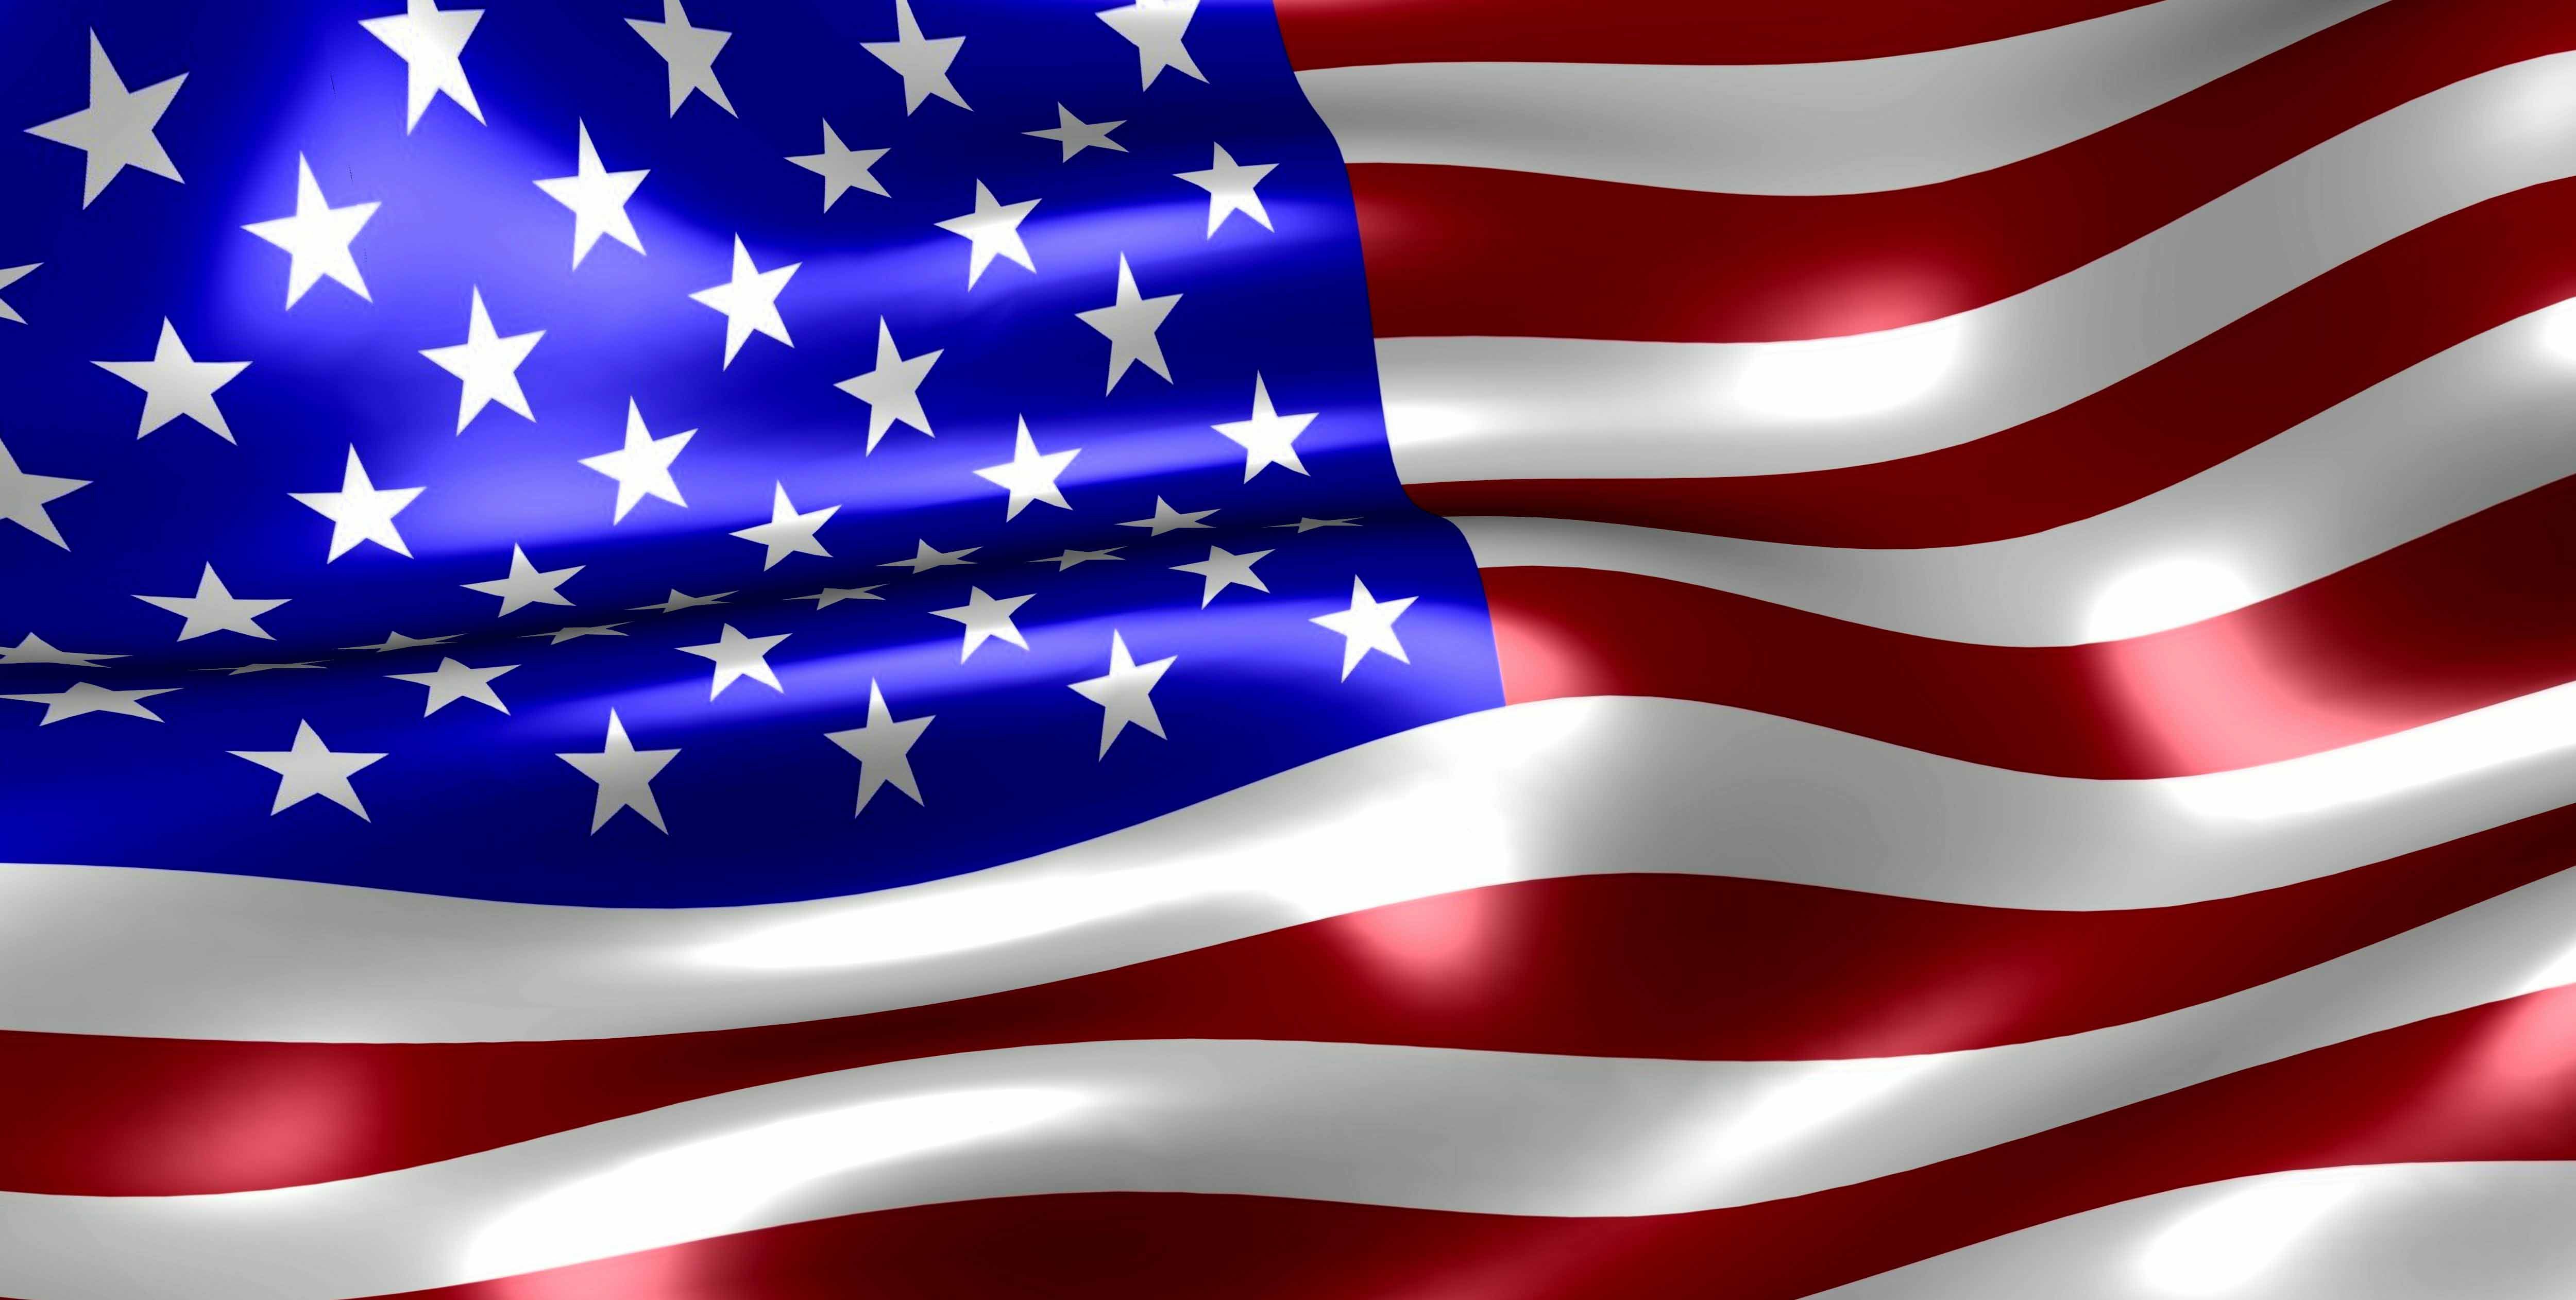 USA Flag HD Wallpaper Free Download. New HD Wallpaper Download